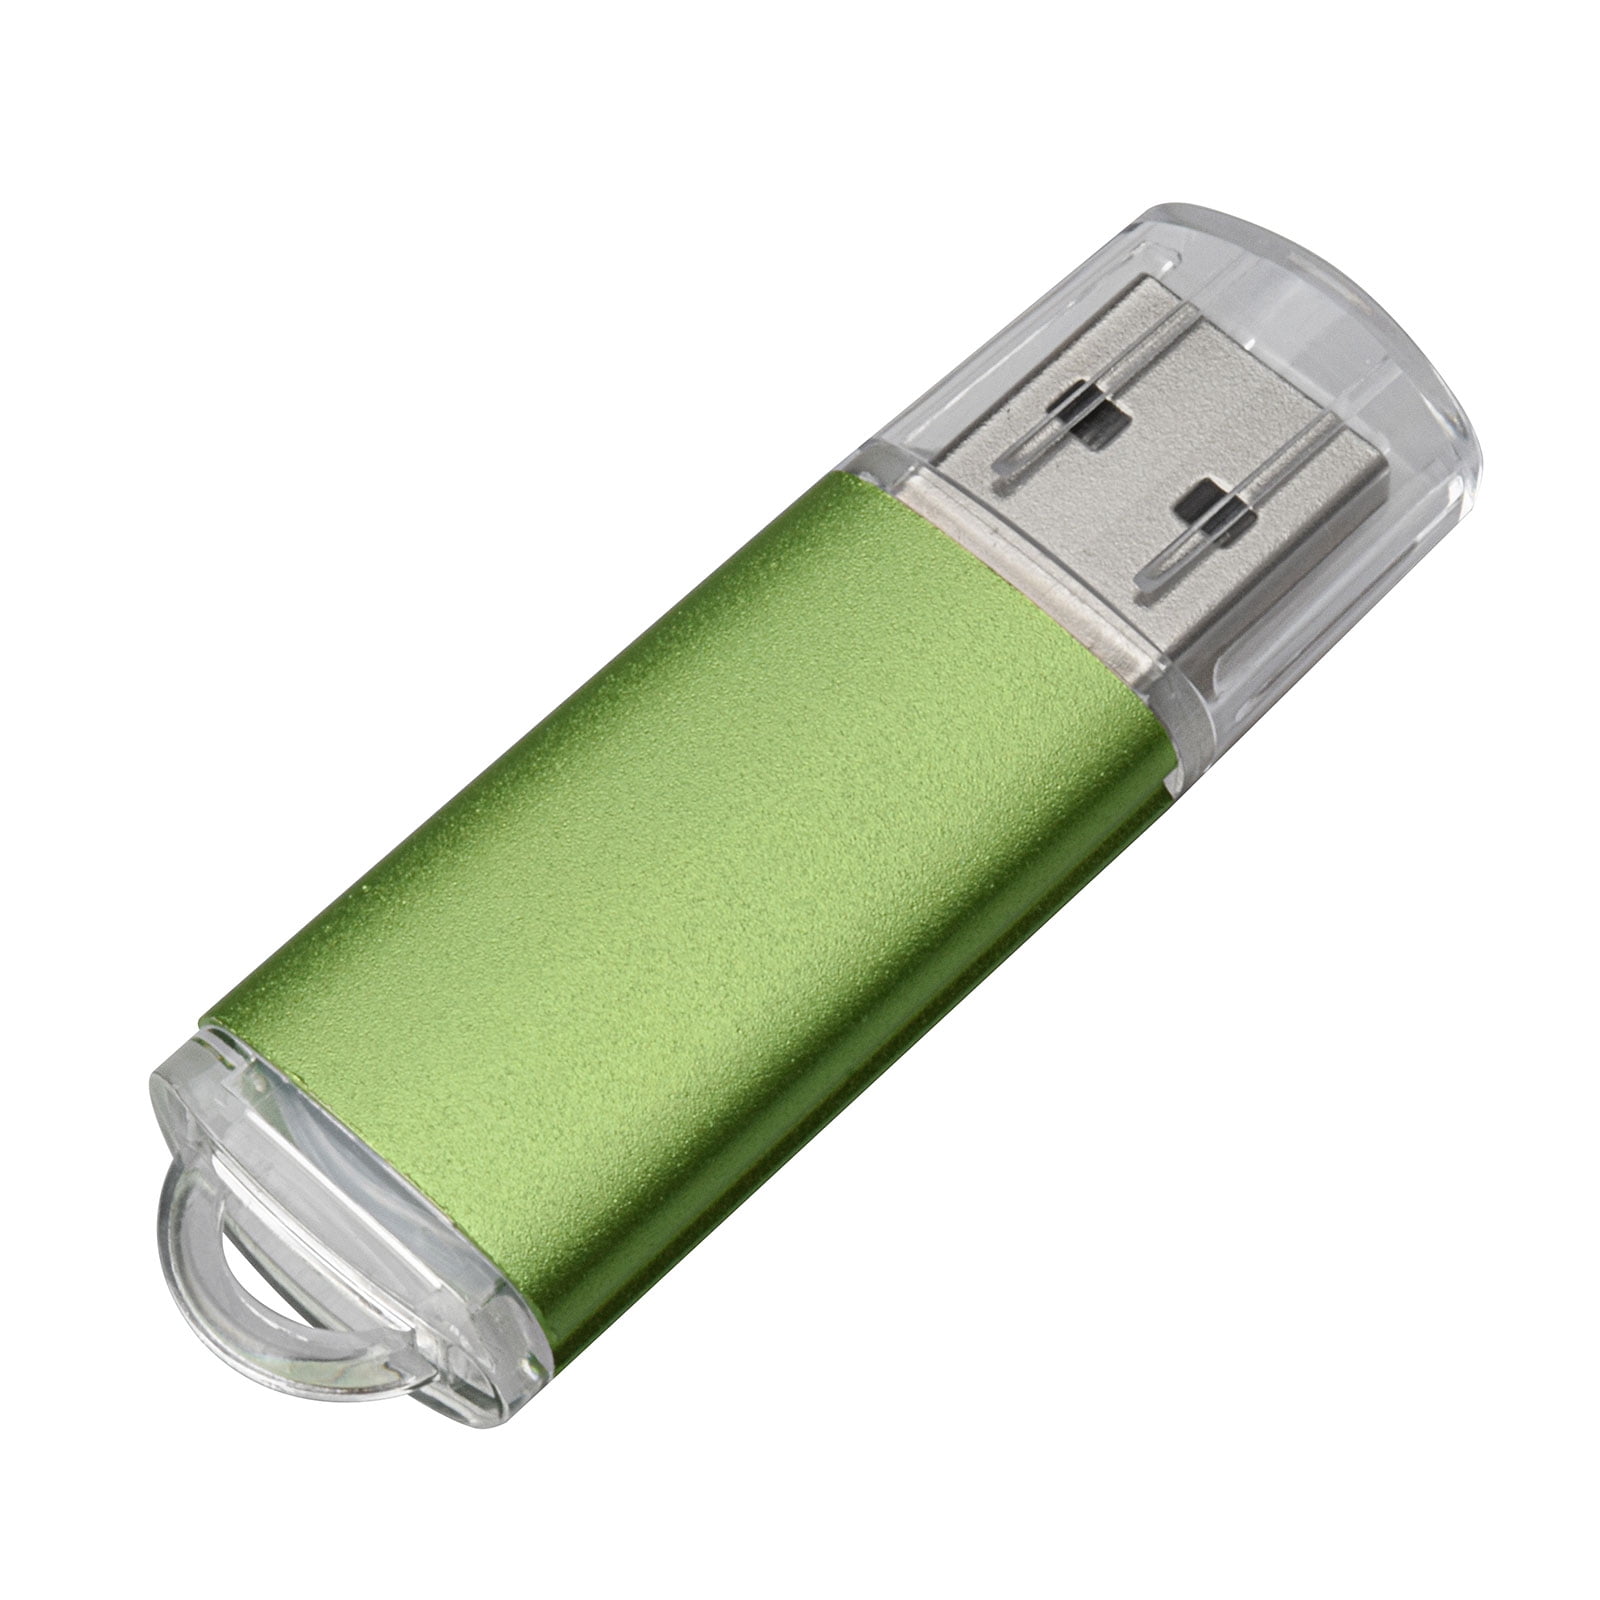 32GB Blue Green Memory Stick 2 Pack 32GB USB 2.0 Flash Drives Thumb Drive Pen Drive by SIMMAX 